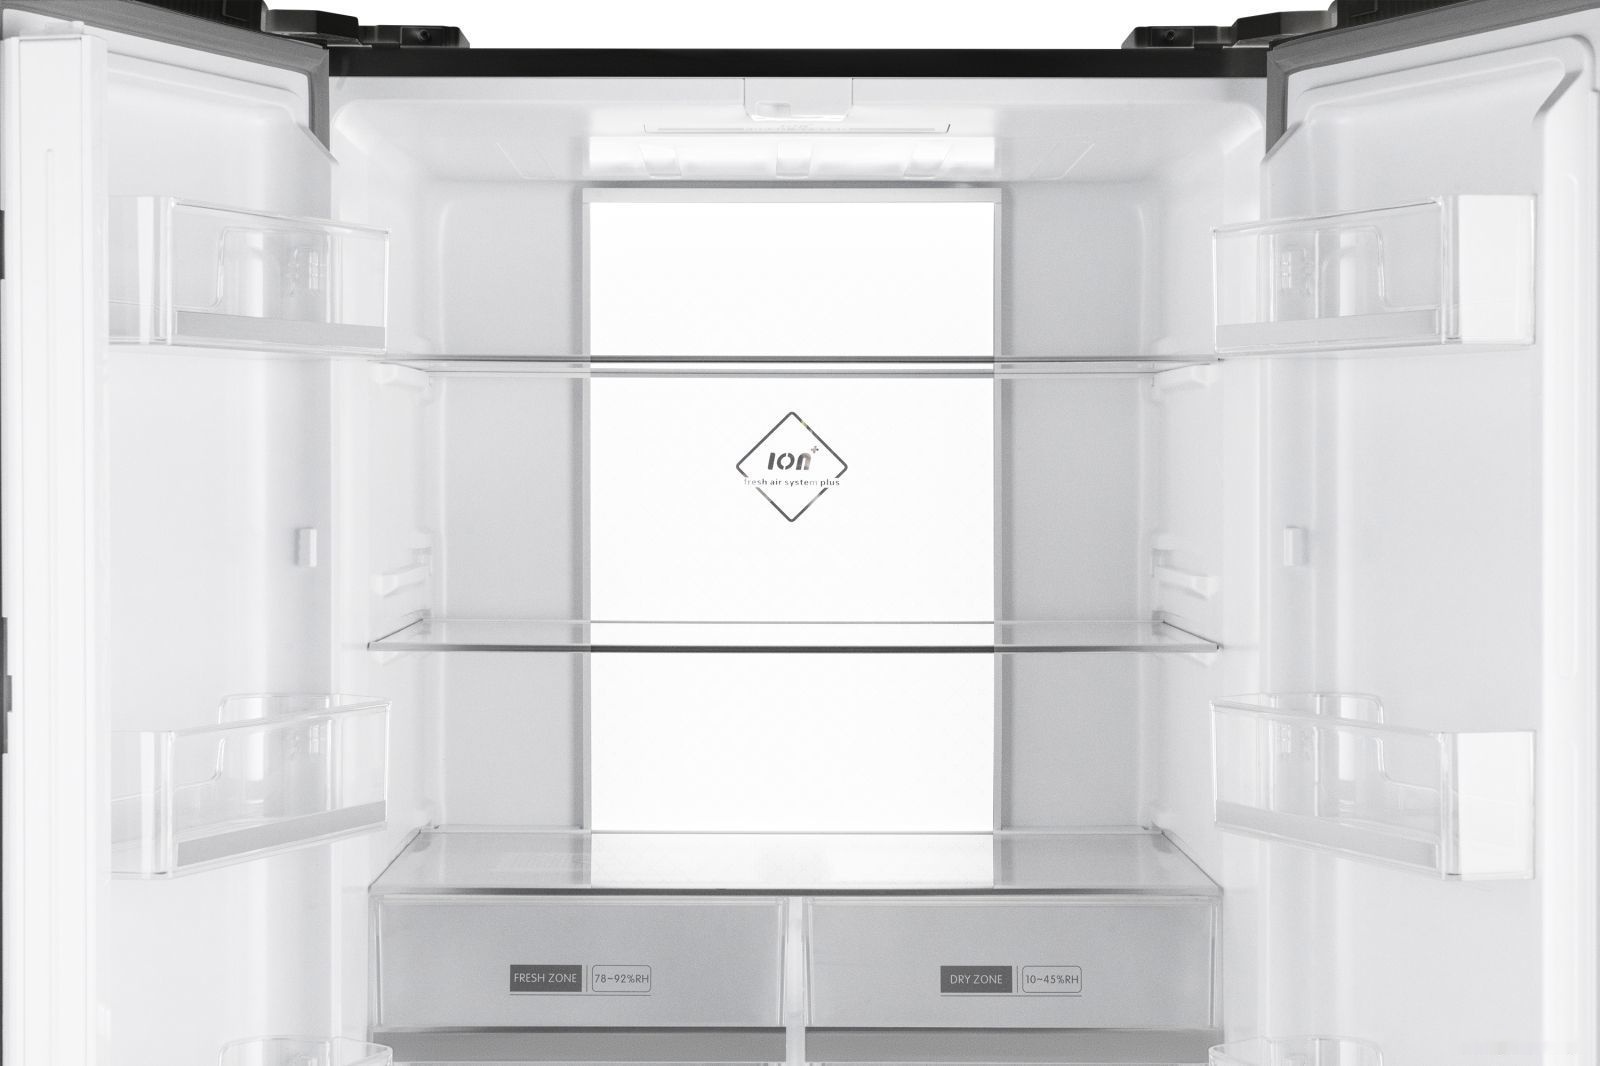 четырёхдверный холодильник weissgauff wcd 450 bg nofrost inverter